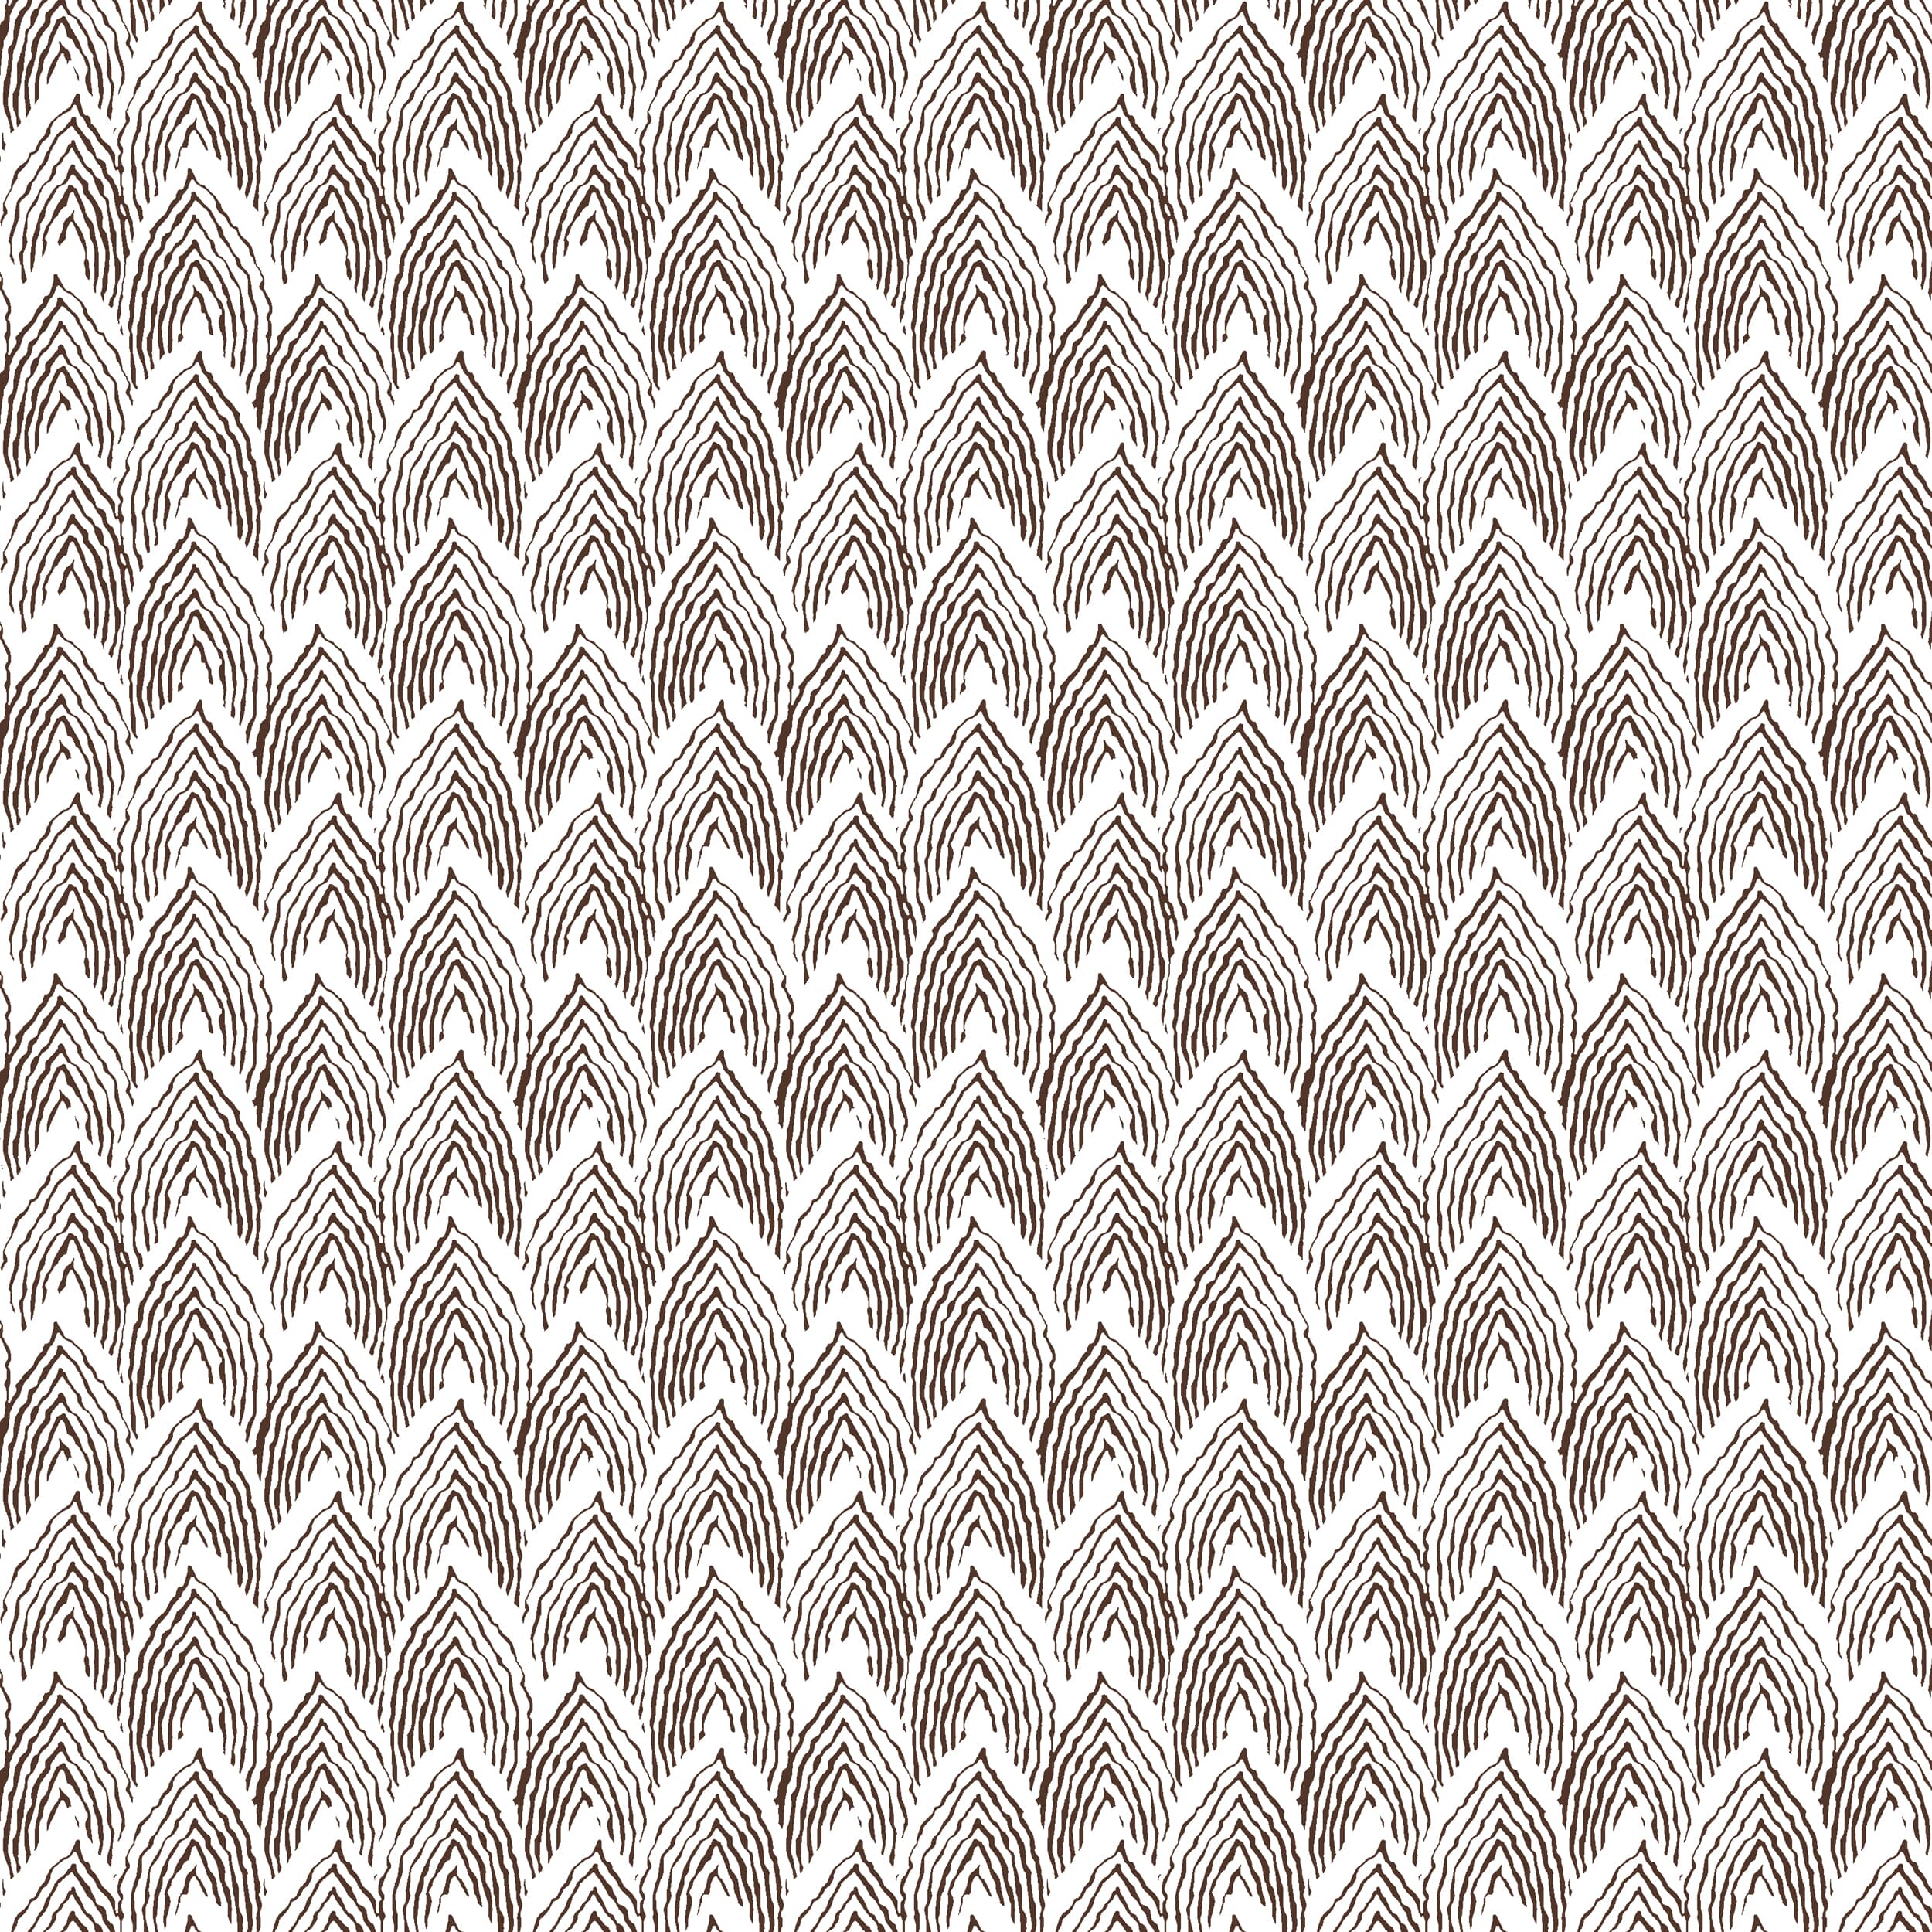 W01vl-4 Piedmont Saddle Wallpaper by Stout Fabric